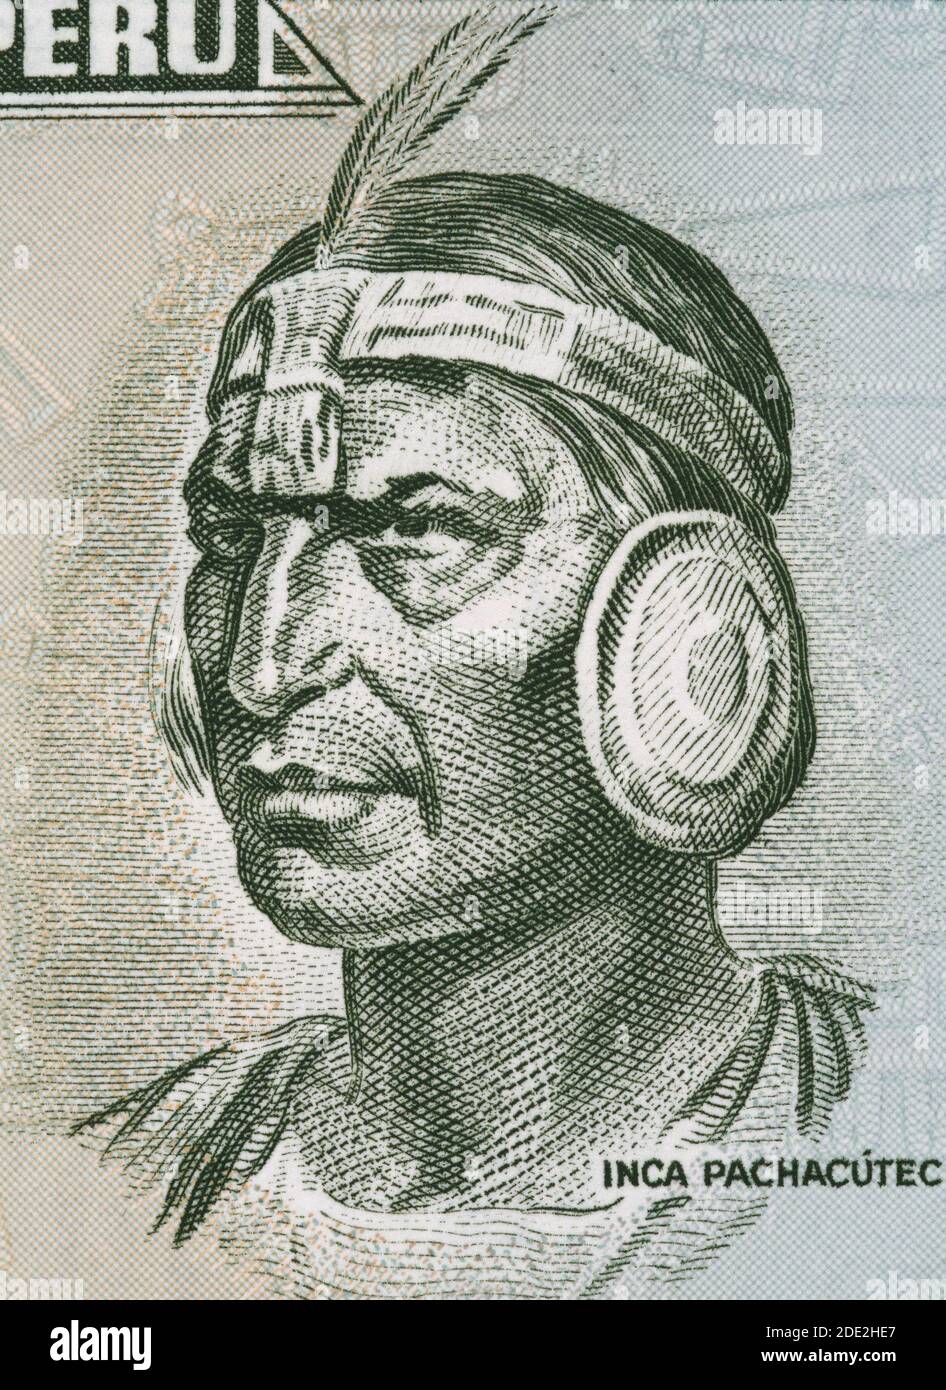 Inca Pachacutec face portrait on Peru 5 soles (1974) banknote closeup fragment, Peruvian money close up. Stock Photo